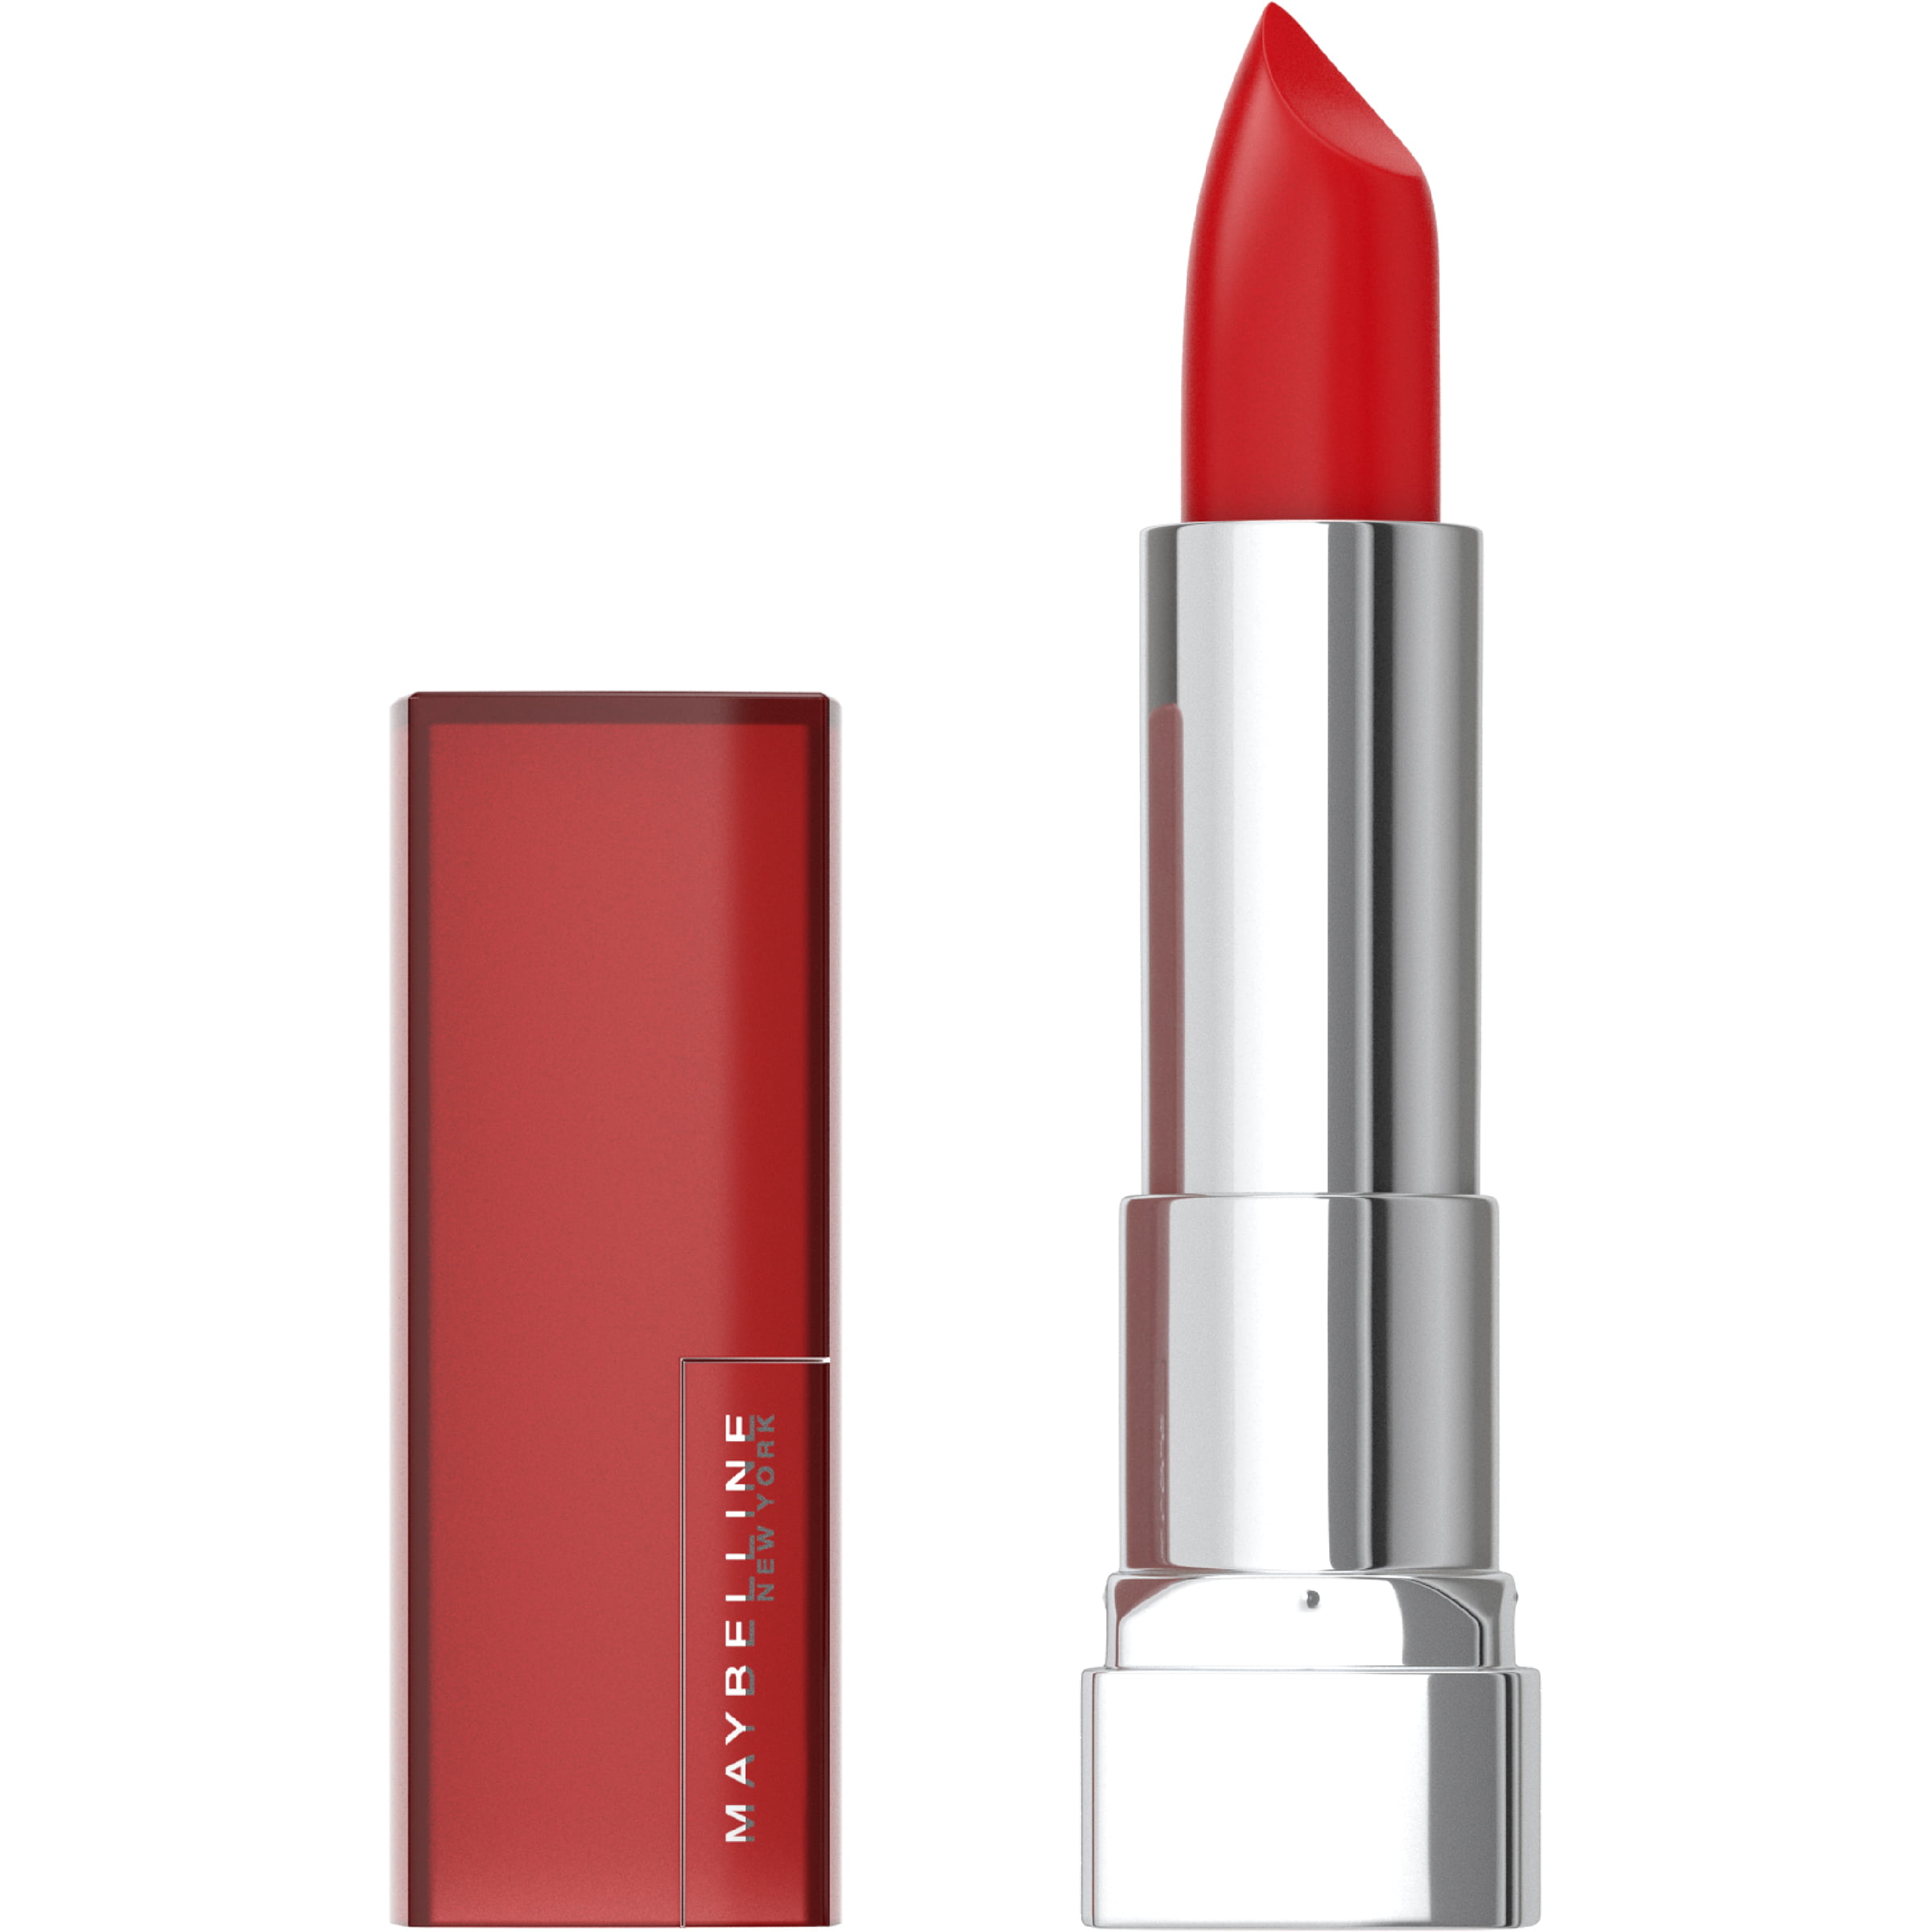 Maybelline Color Sensational Matte Finish Lipstick, Siren In Scarlet - image 1 of 4